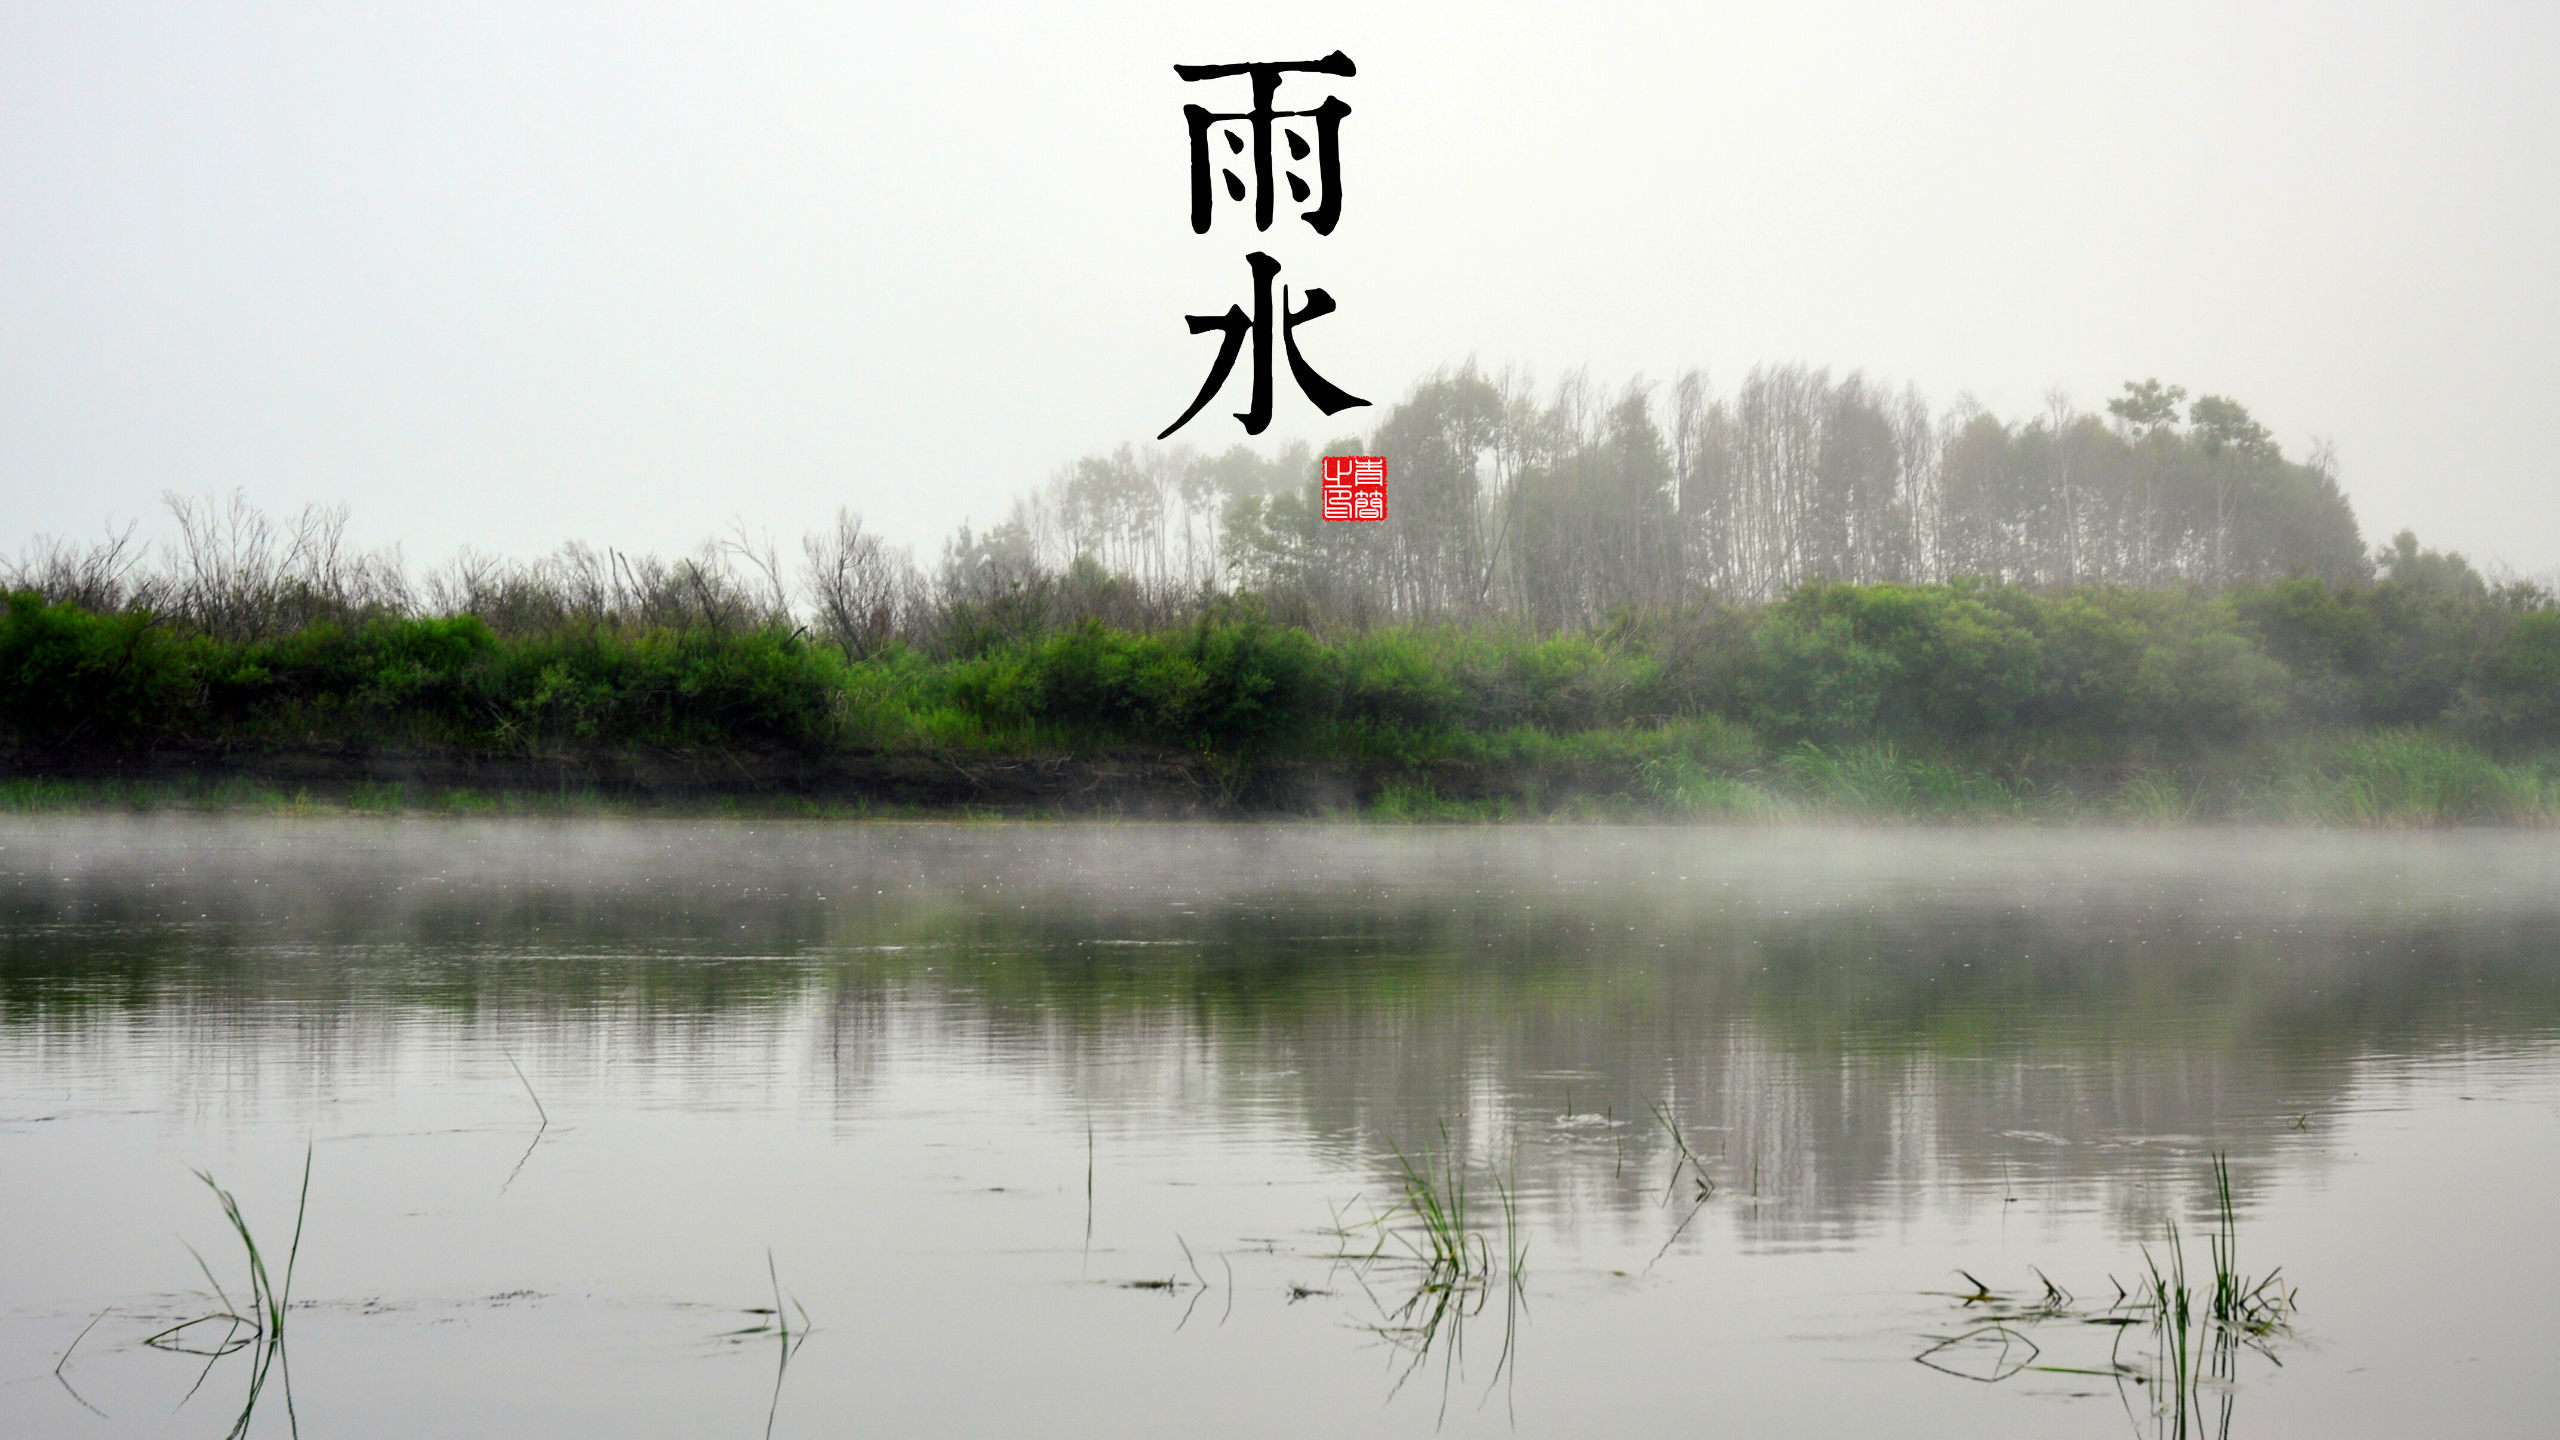 General 2560x1440 seasons rain kanji Chinese jieqi